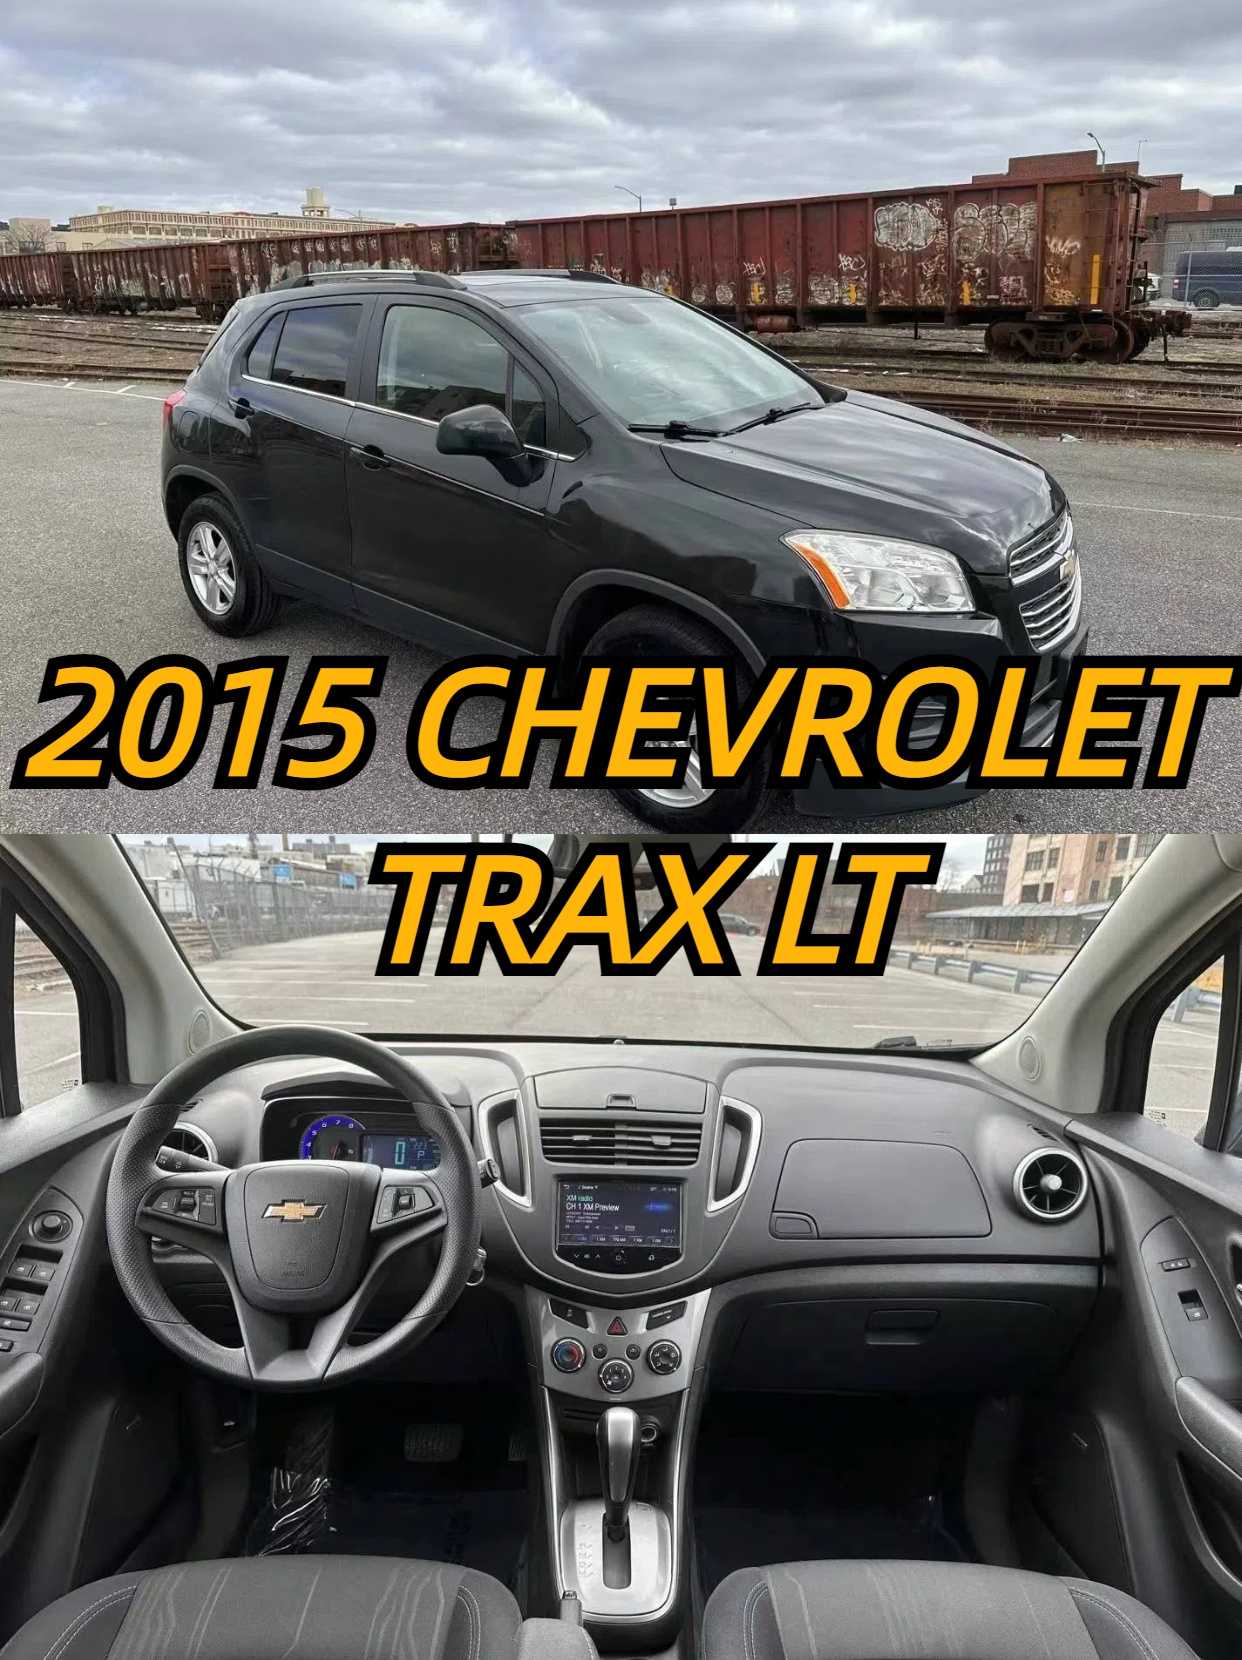 2015 CHEVROLET TRAX LT🔺.jpg